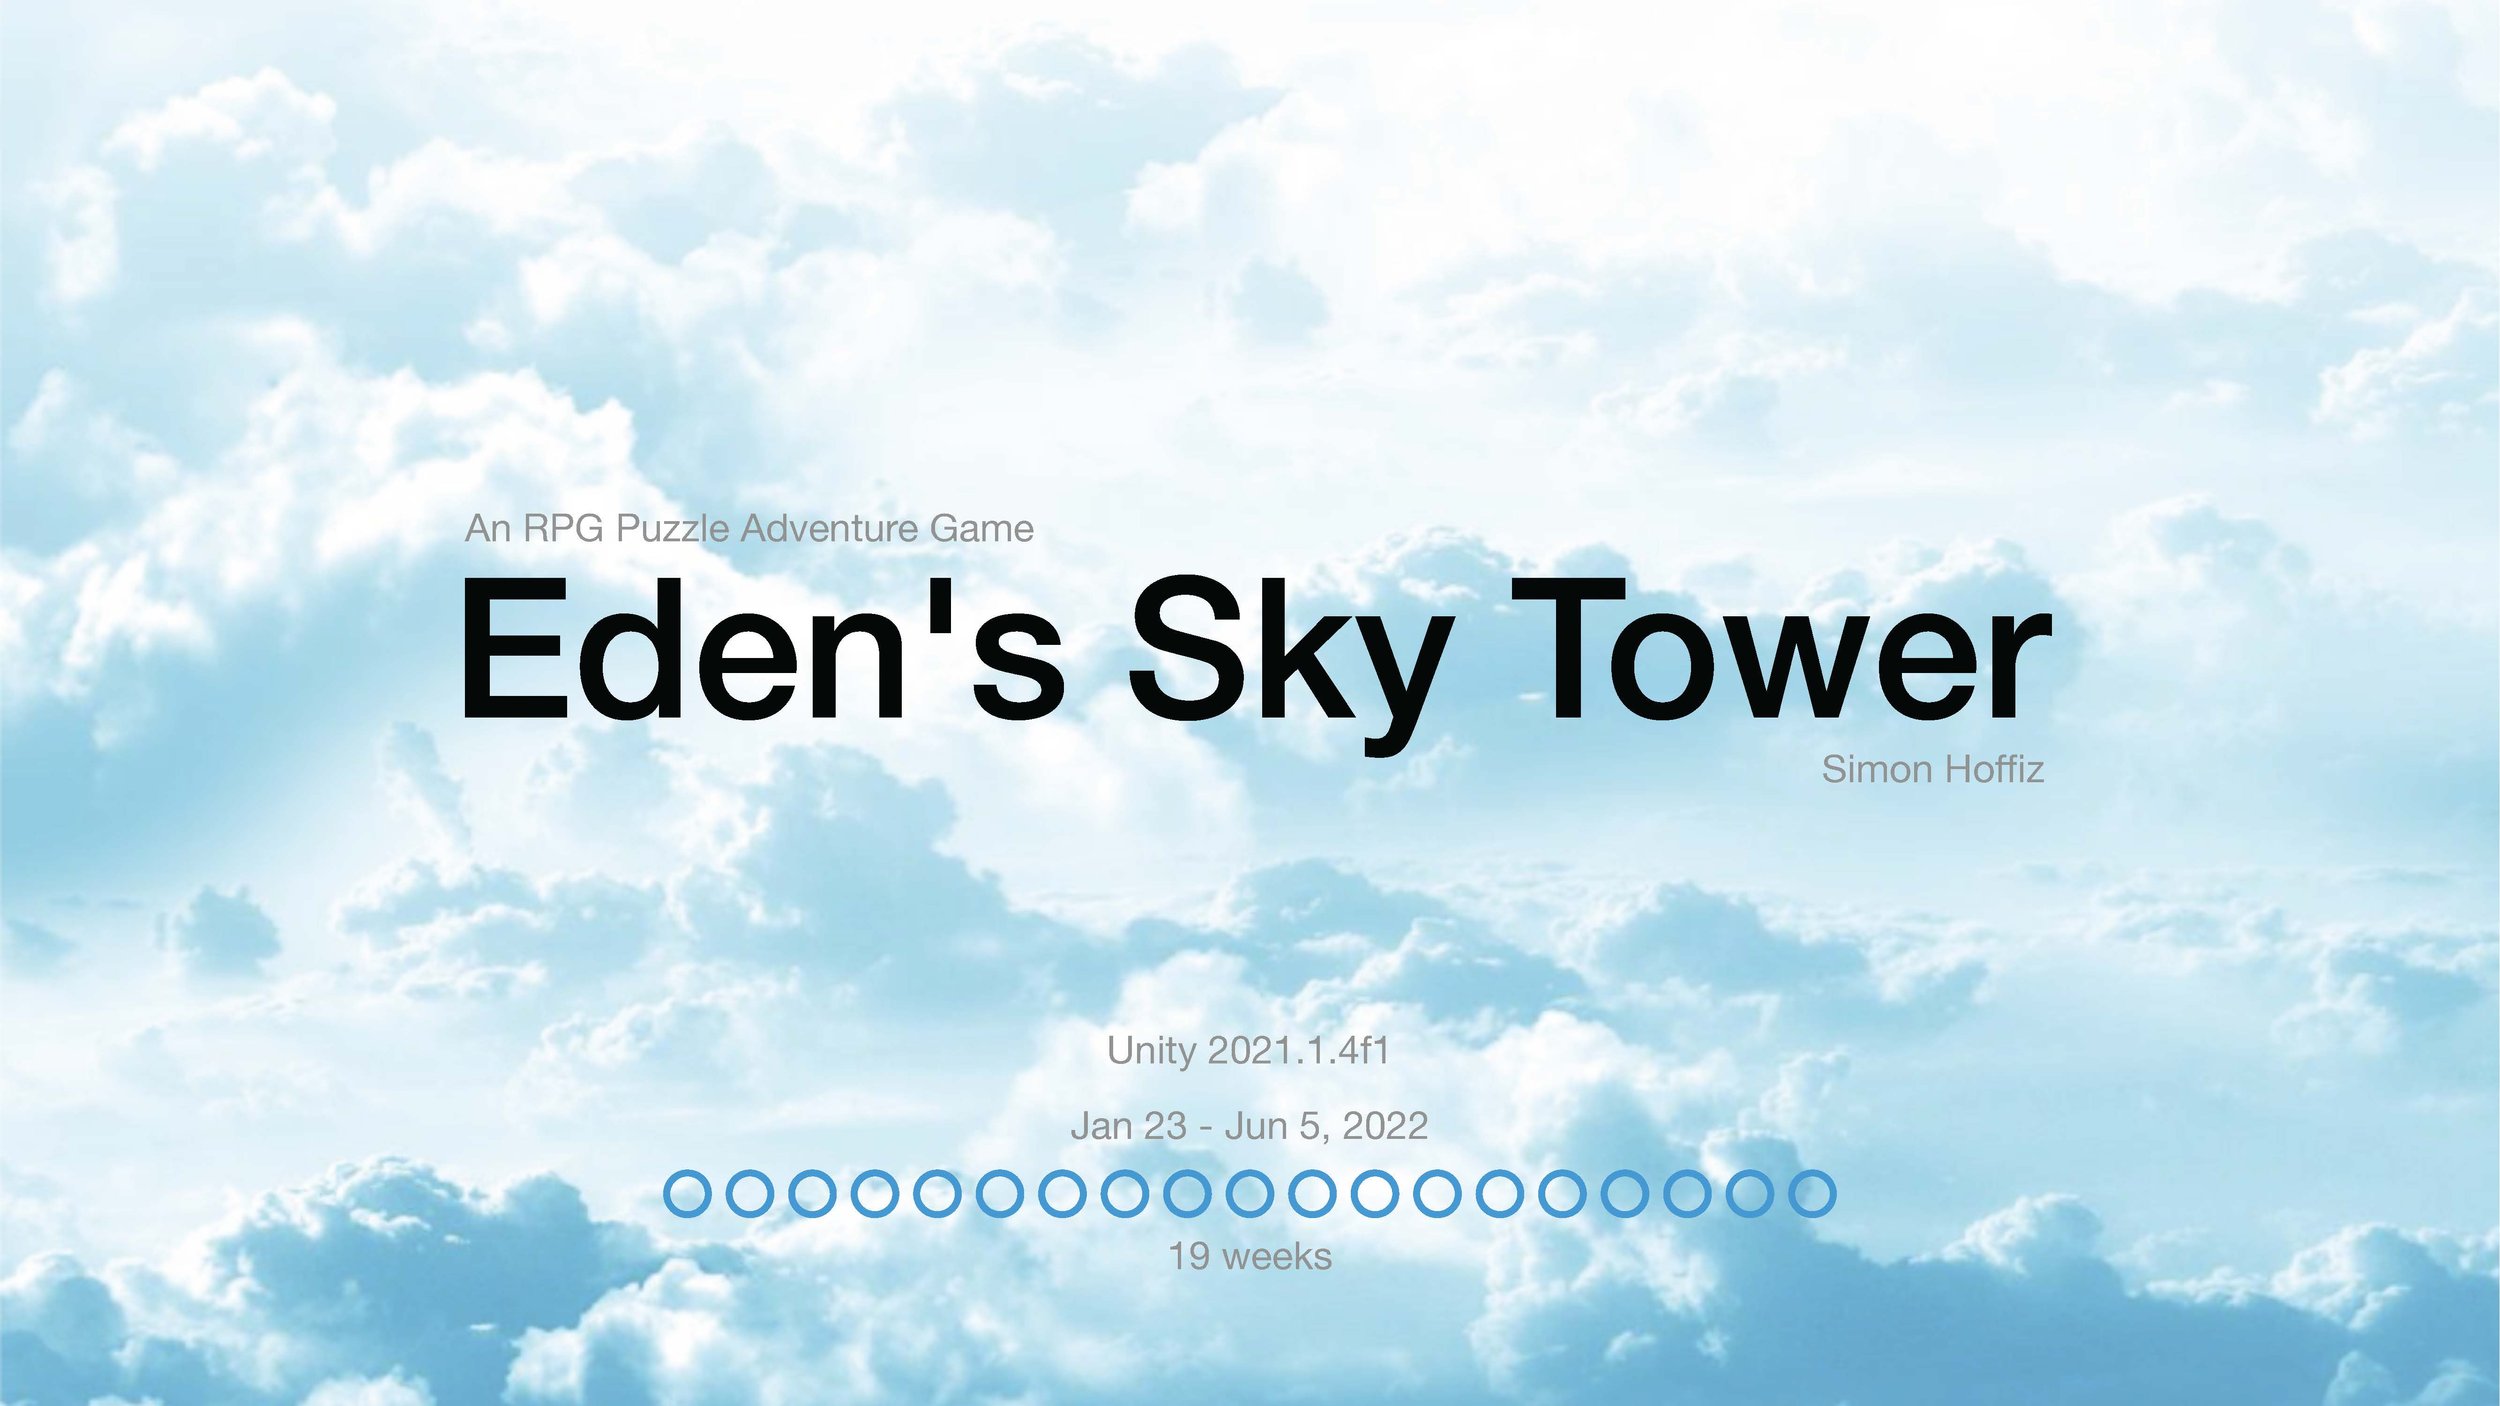 Eden's Sky Tower Pitch Slide 01.jpg